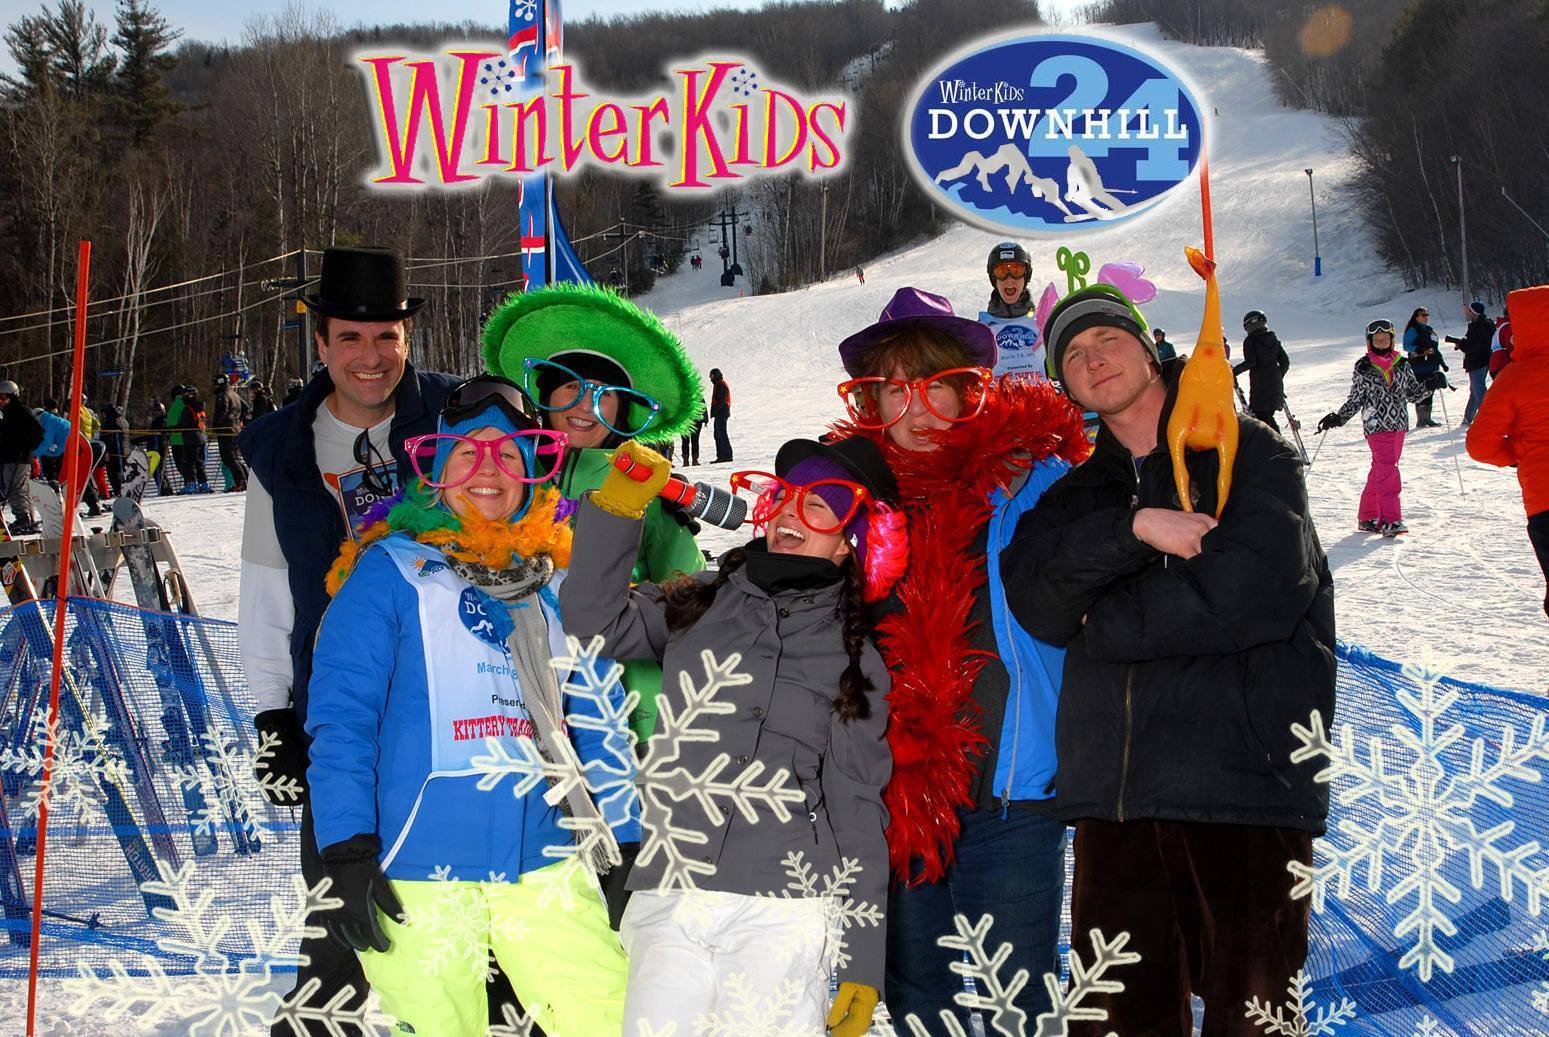 WinterKids Downhill24 2015 Photo Booth017